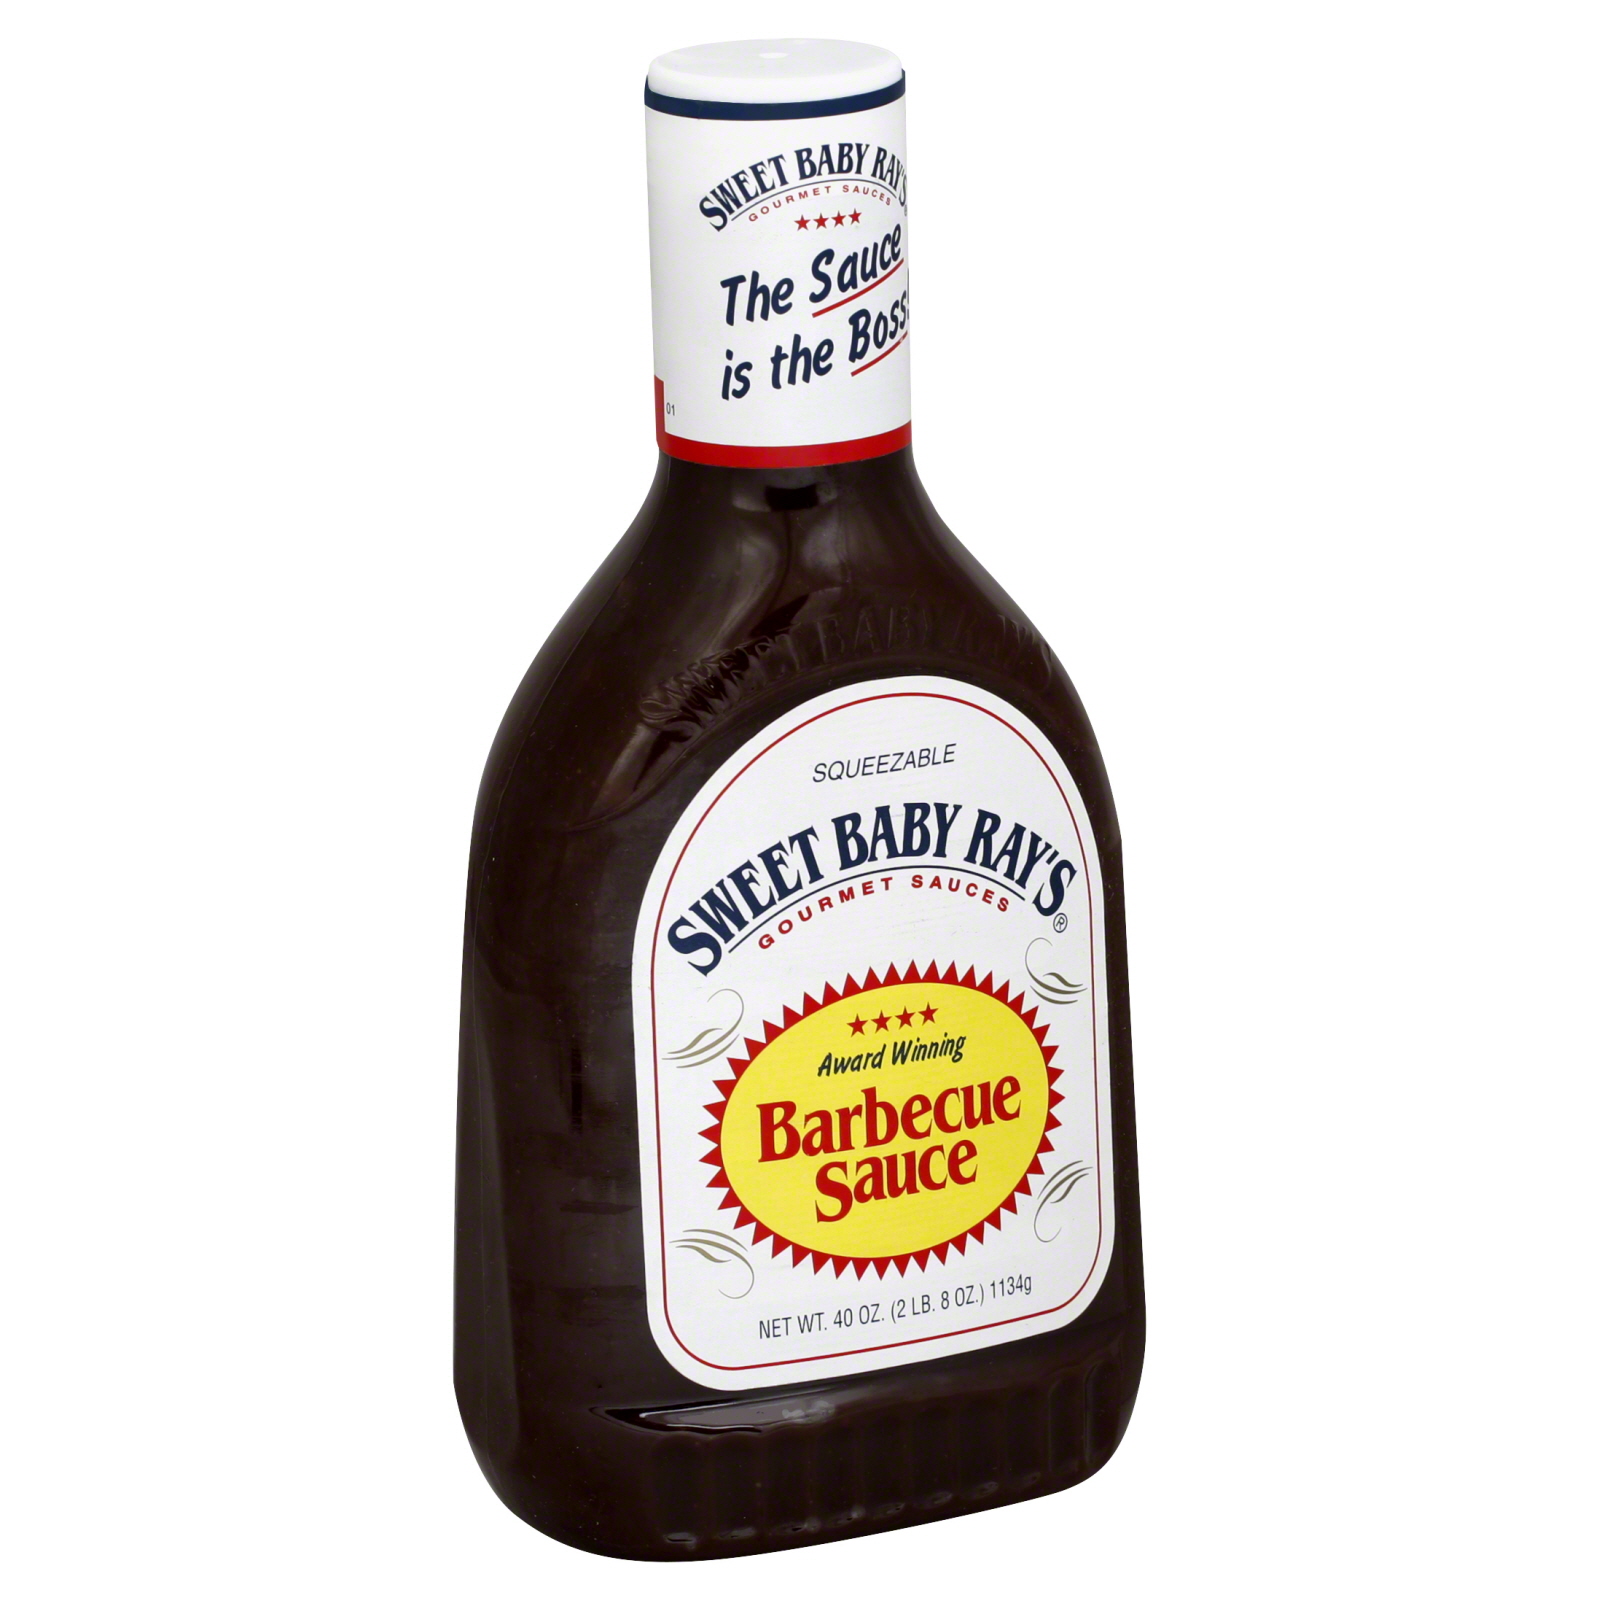 Sweet Baby Ray's Barbecue Sauce, Original, 40 oz (2 lb 8 oz) 1134 g